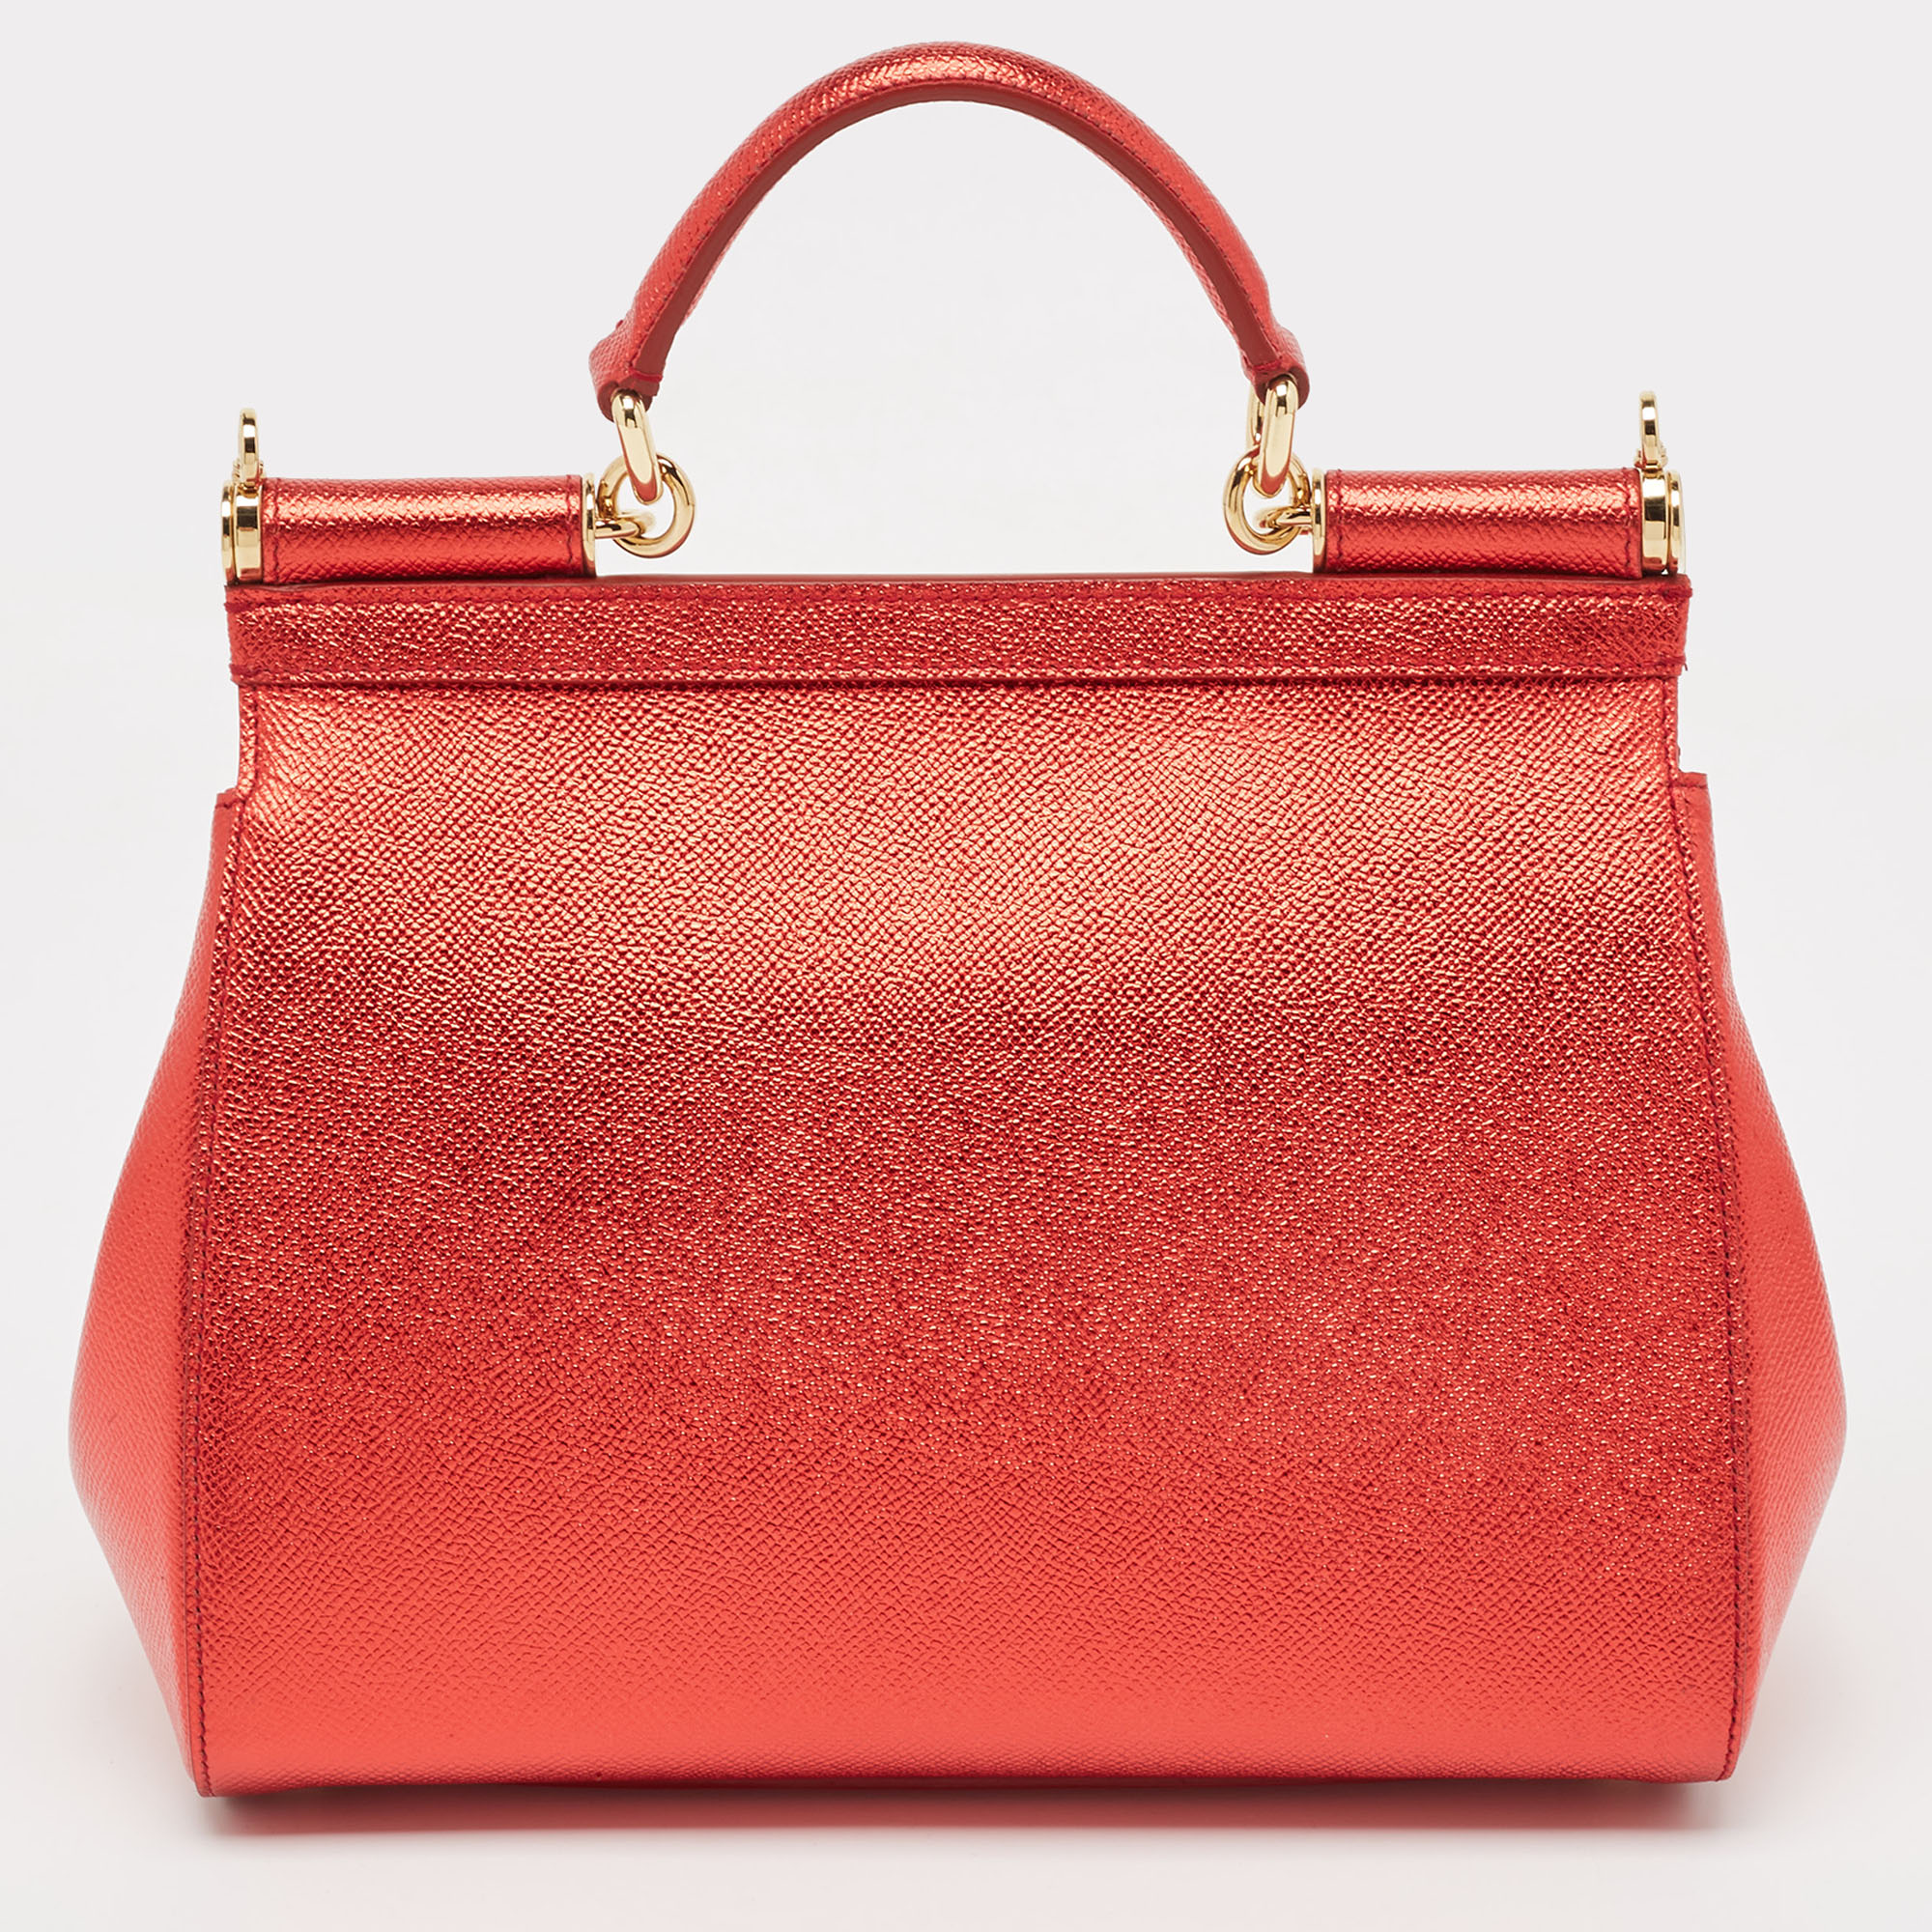 Dolce & Gabbana Red Leather Medium Miss Sicily Top Handle Bag